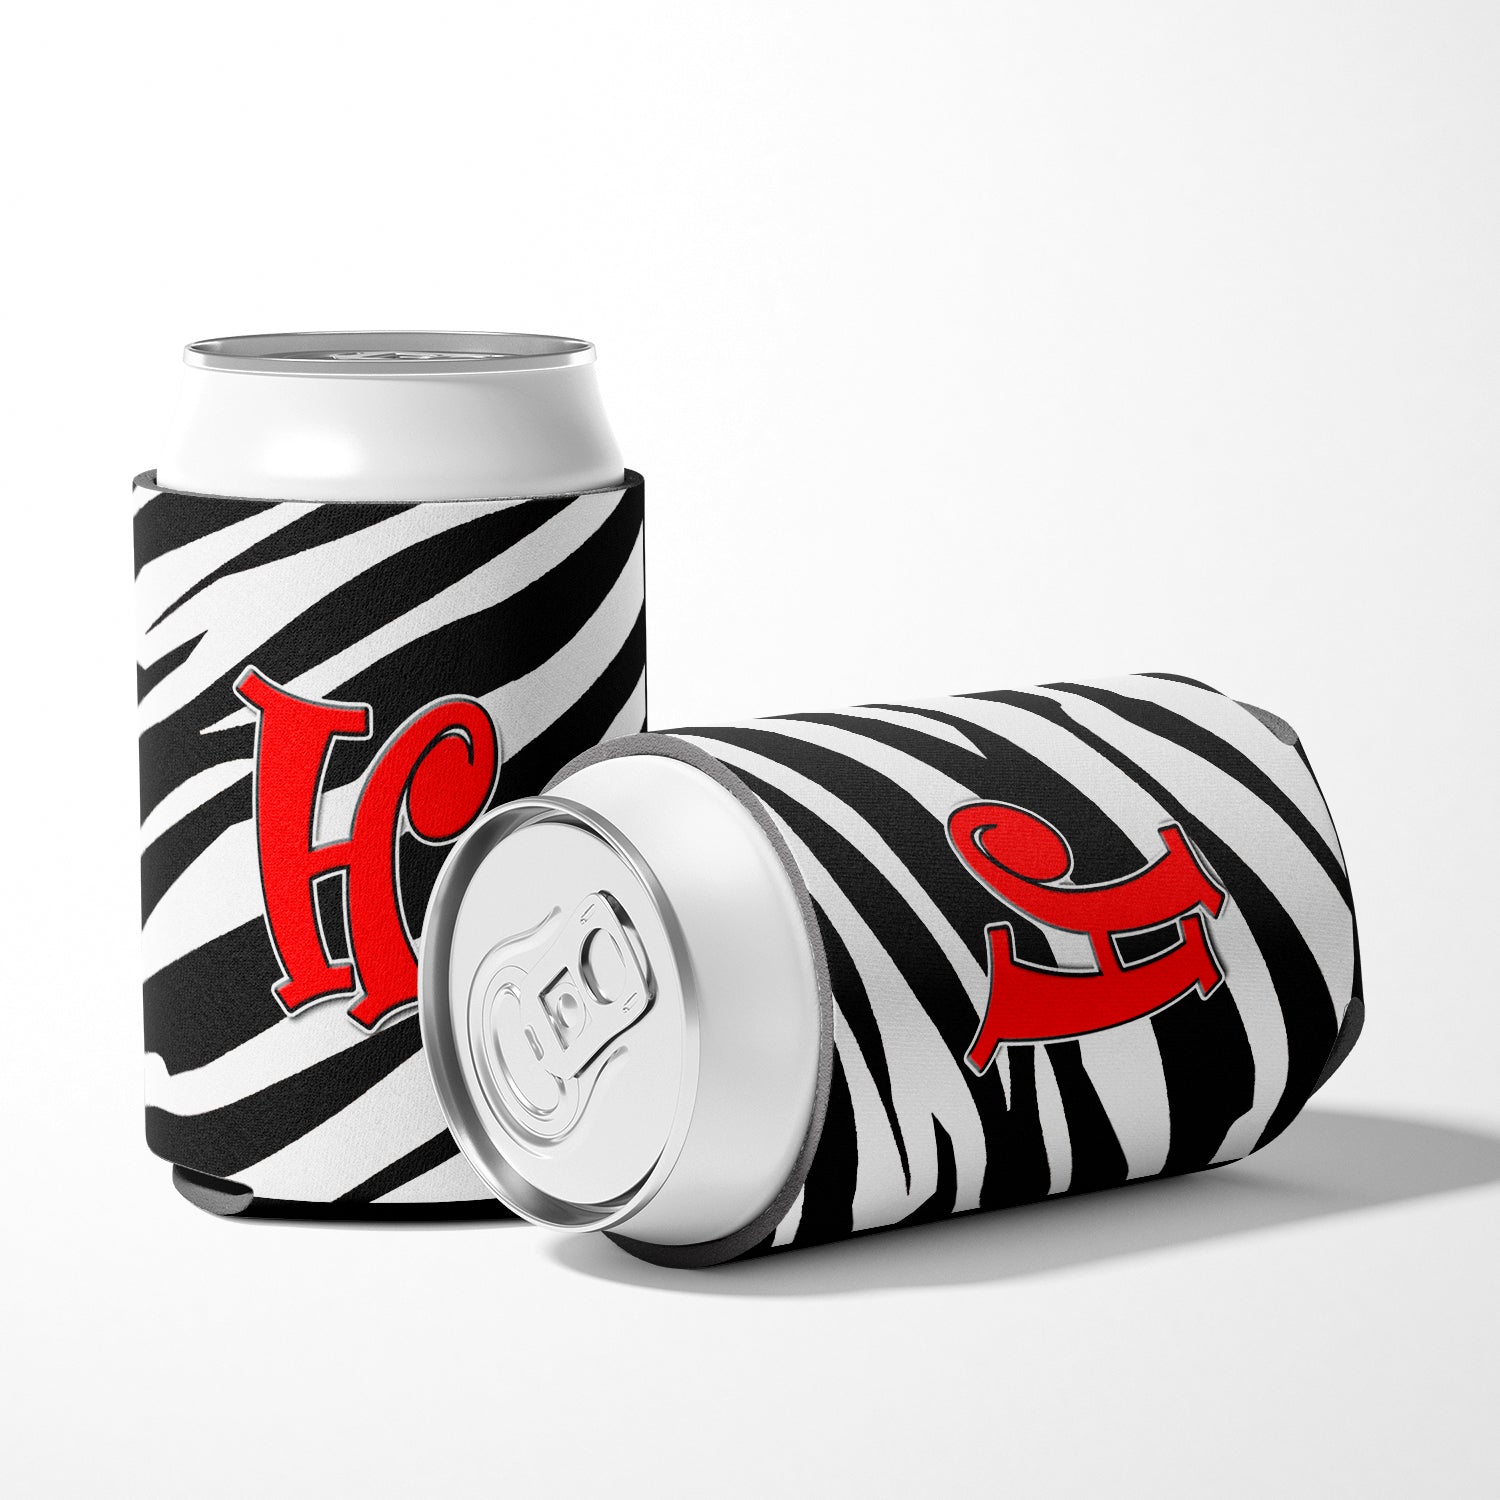 Letter H Initial Monogram - Zebra Red Can or Bottle Beverage Insulator Hugger.